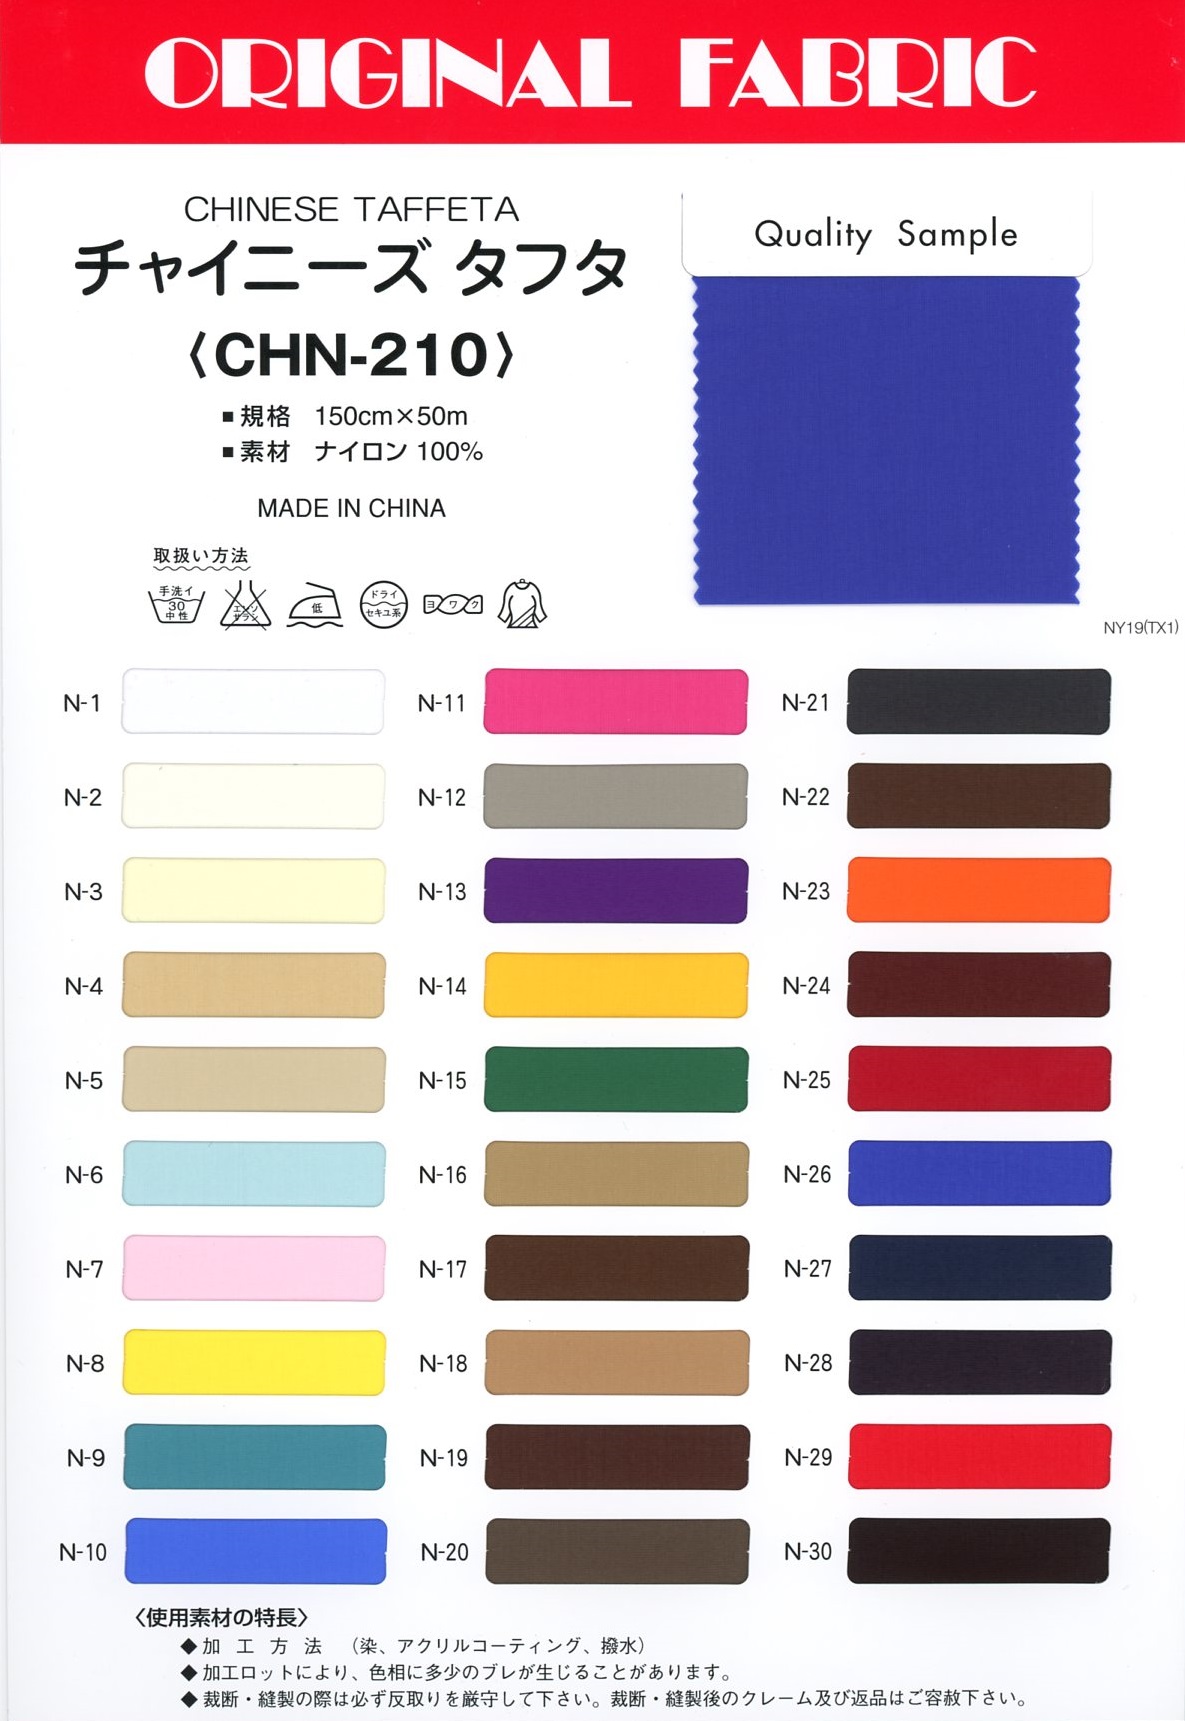 CHN210 Chinese Taffeta[Textile / Fabric] Masuda